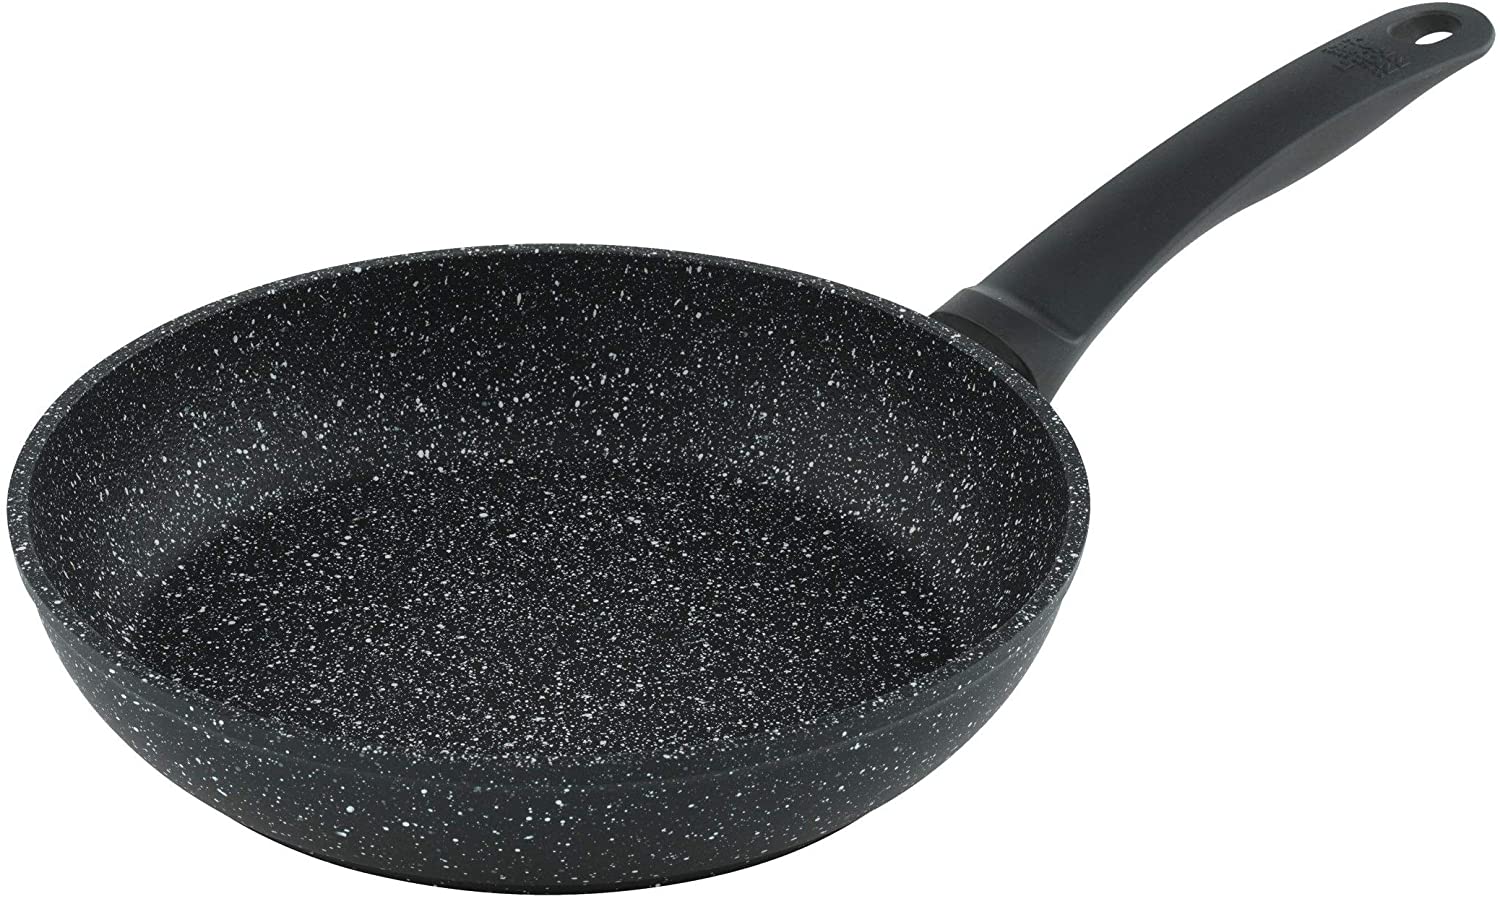 Kuhn Rikon Easy Induction Marble Frying Pan Frying Pan Induction Pan Diameter 20 cm 31555